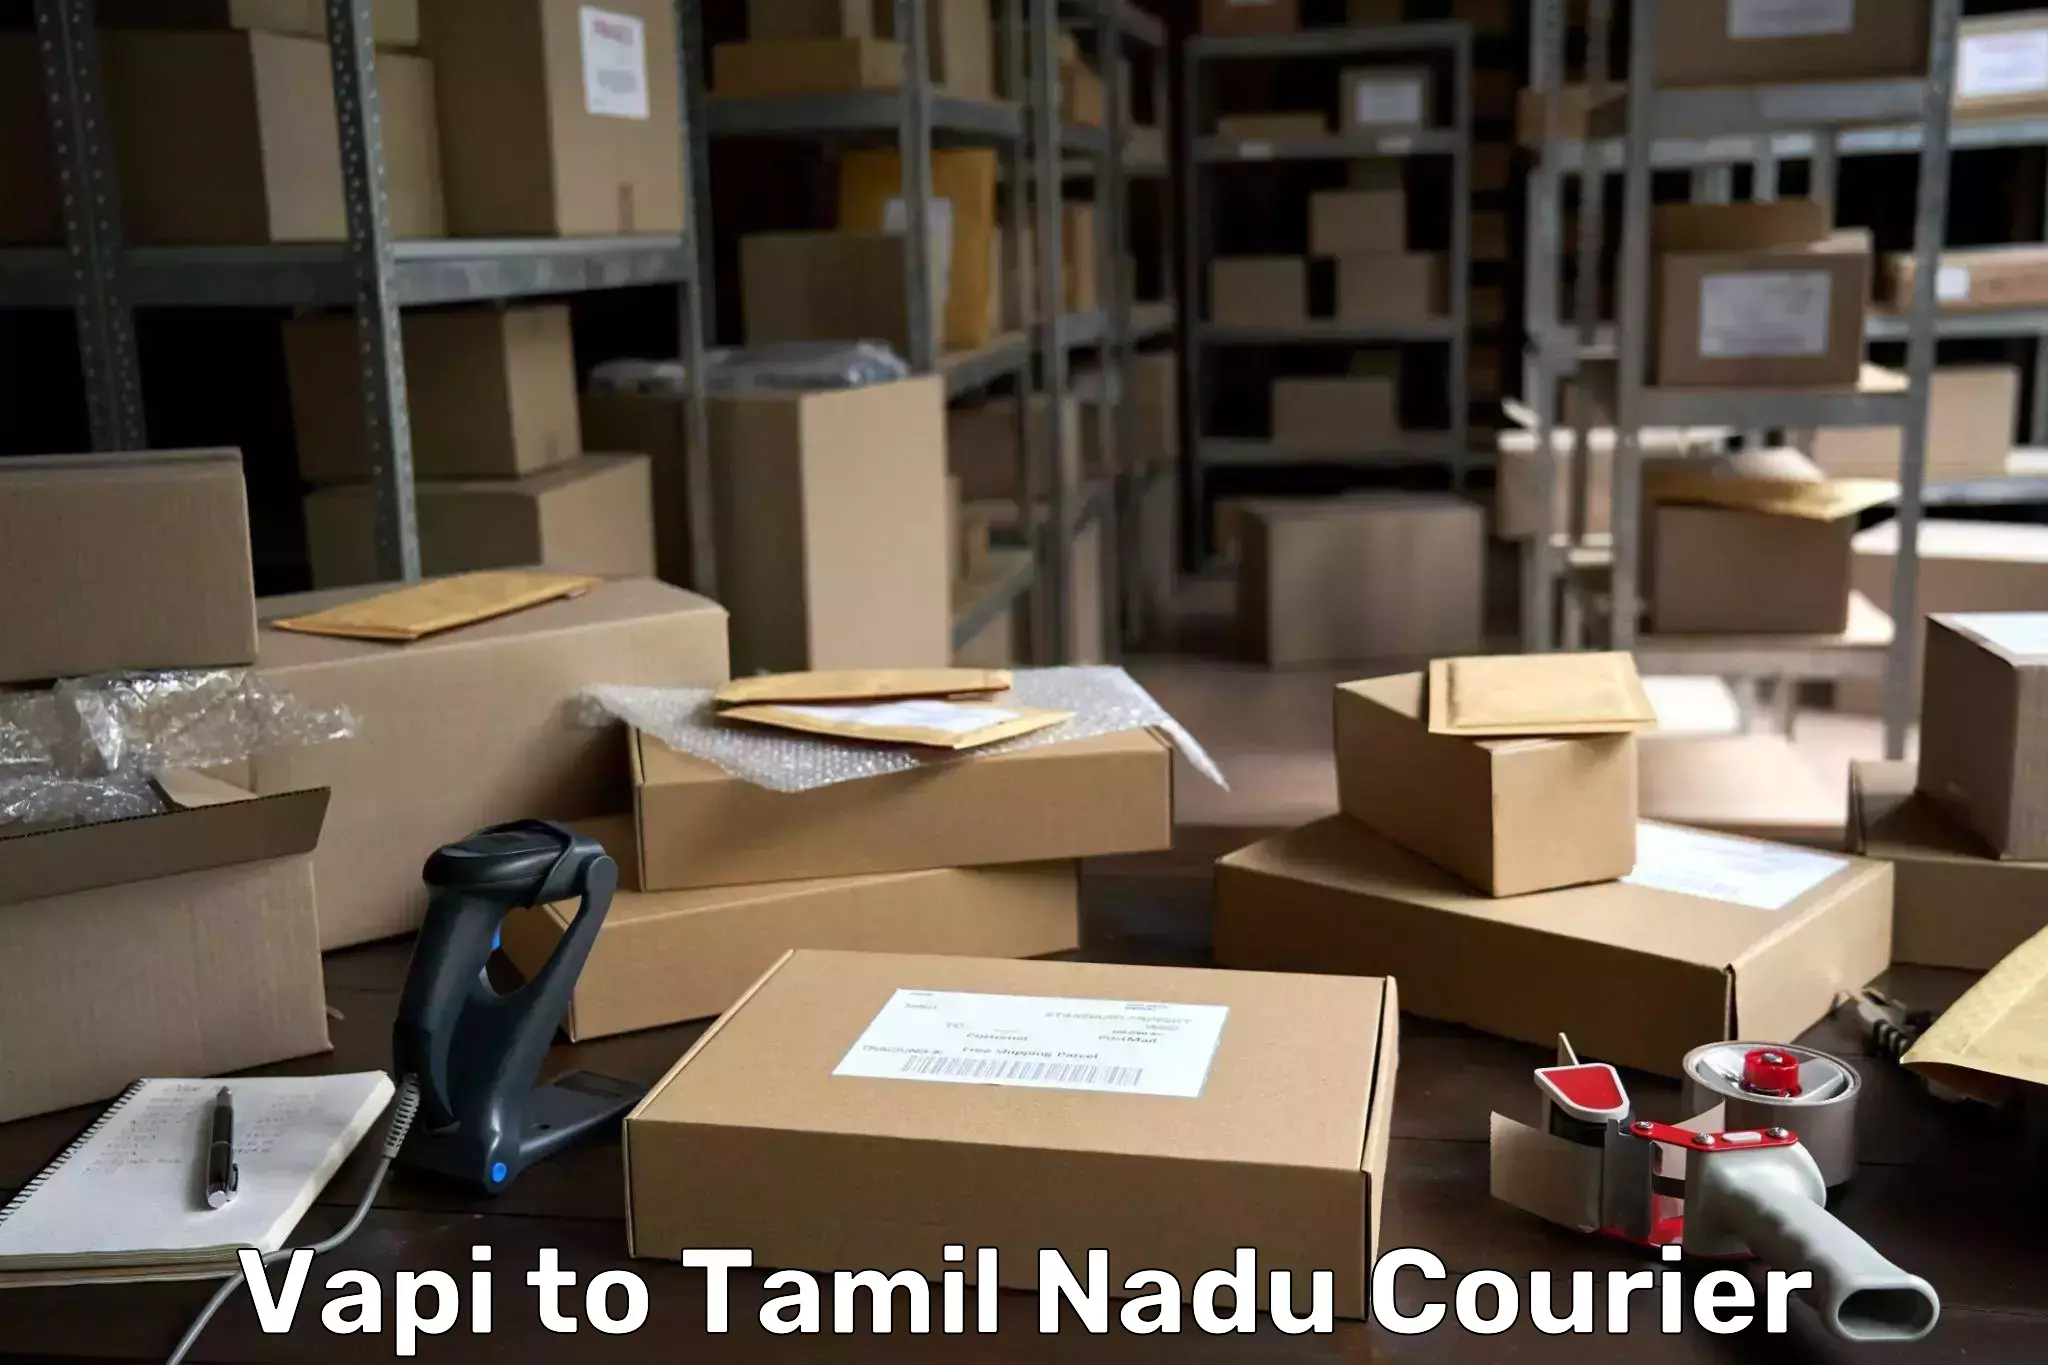 Nationwide delivery network Vapi to Periyakulam